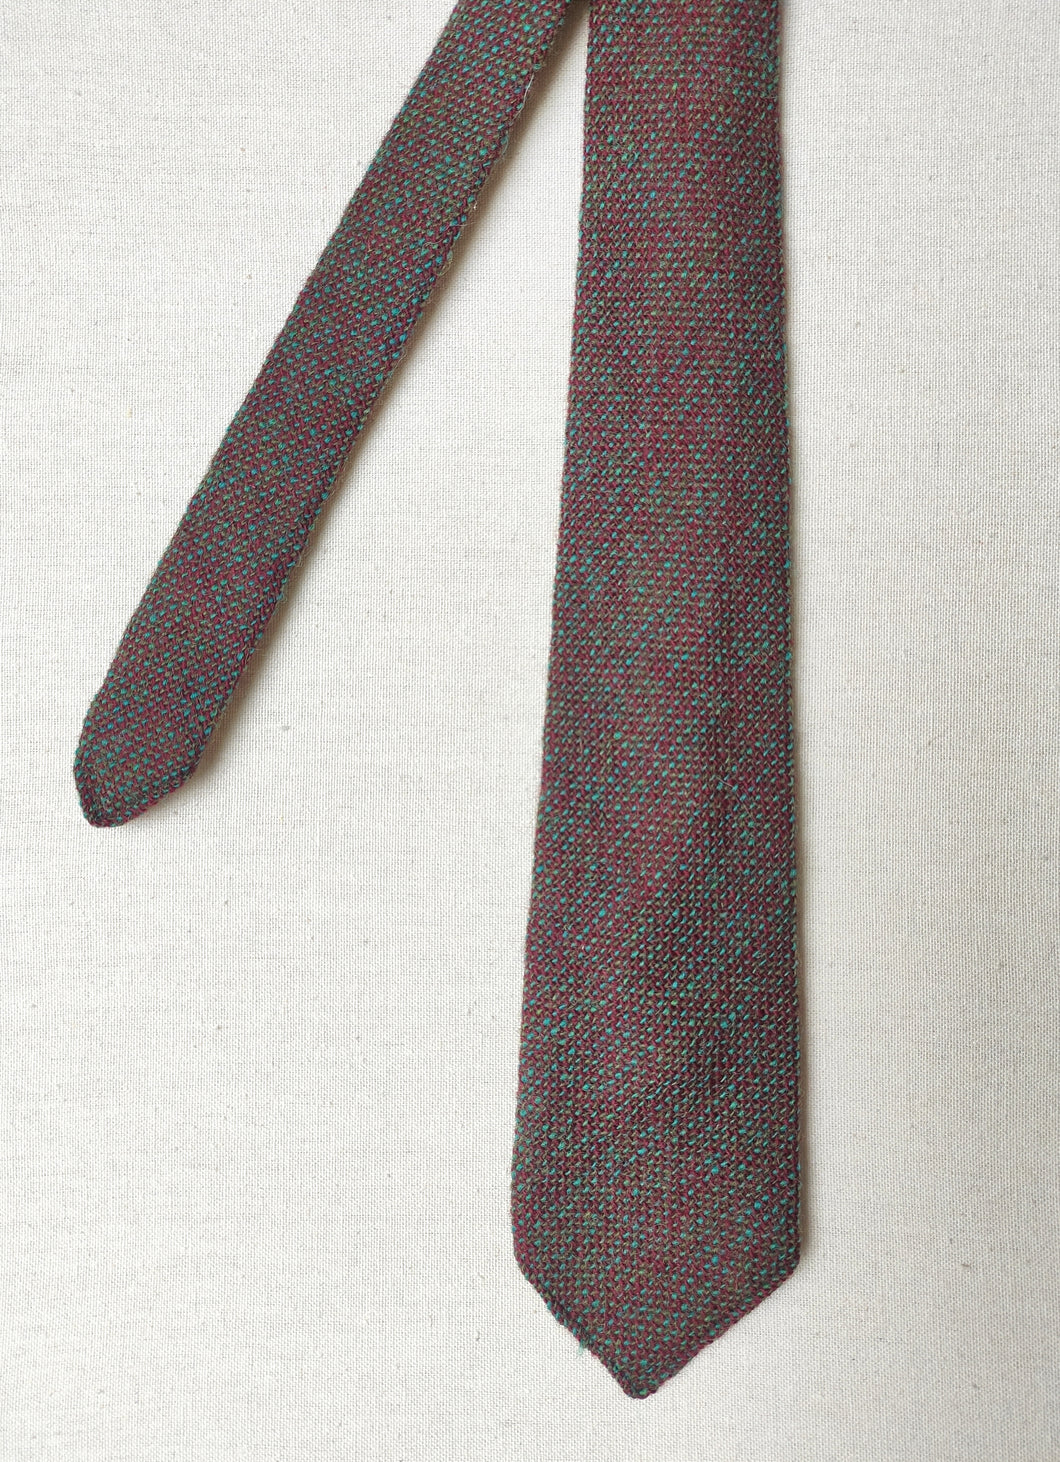 Cravate vintage en pure laine Irish Tweed